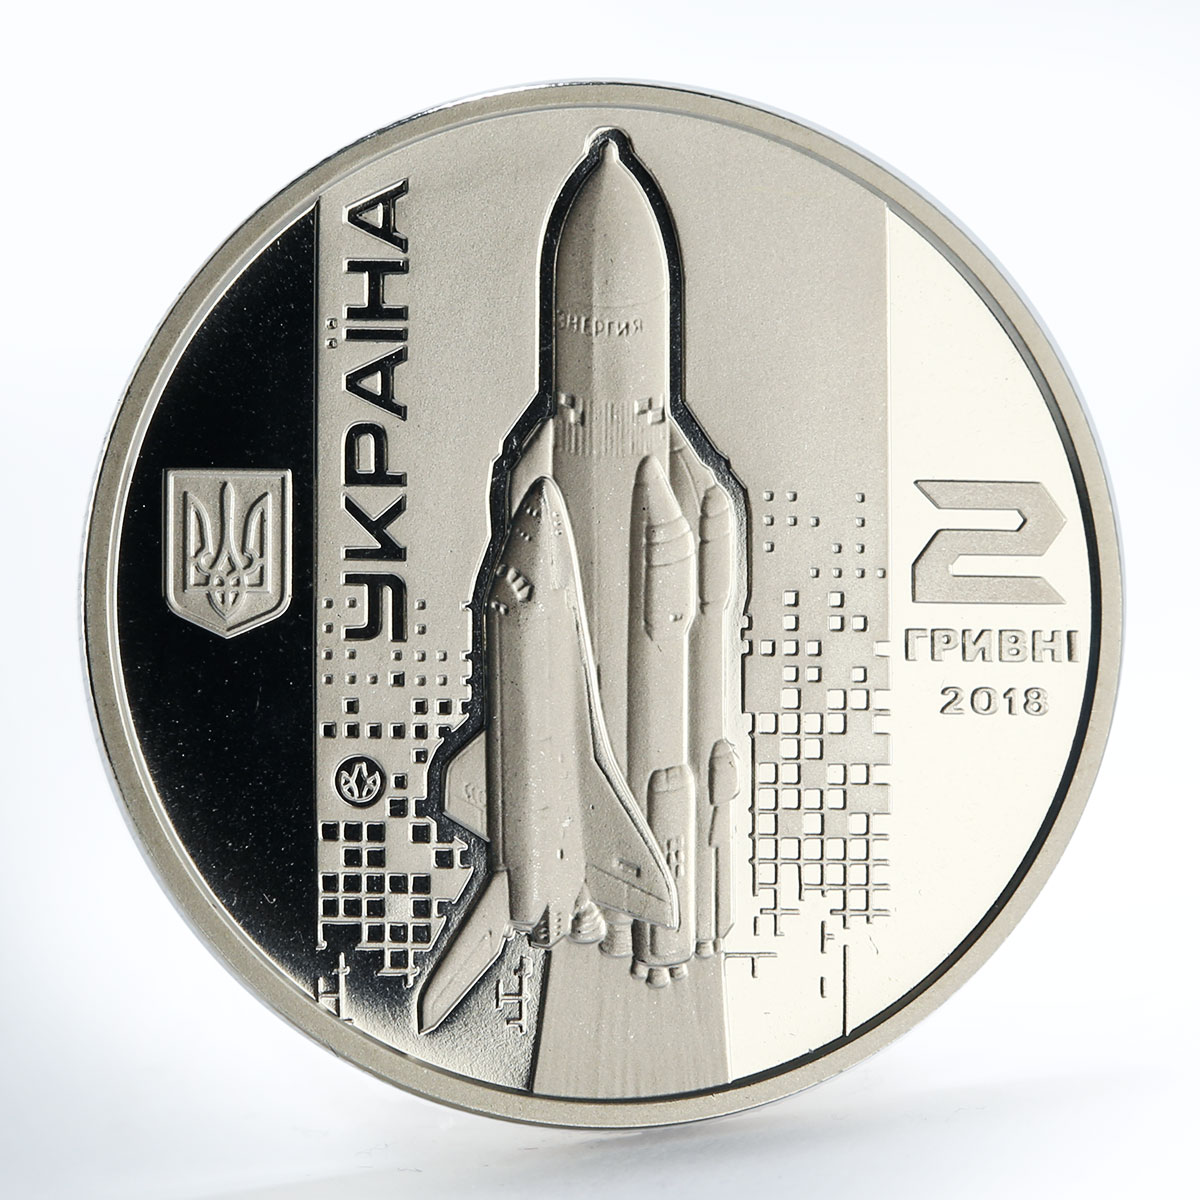 Ukraine 2 hryvni Valentin Glushko rocket engines nickel coin 2018